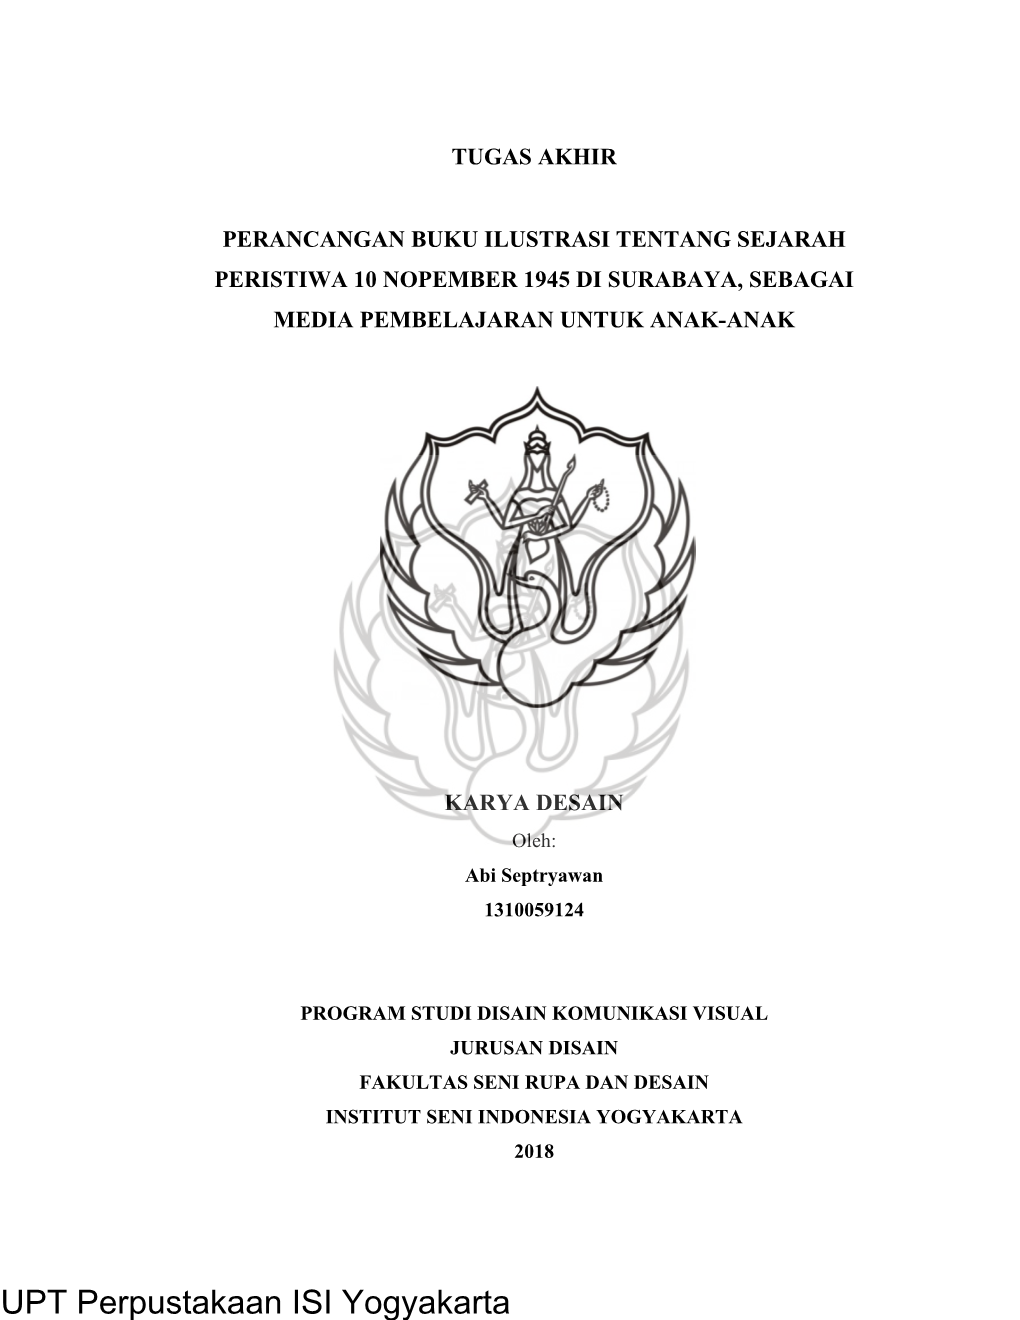 UPT Perpustakaan ISI Yogyakarta TUGAS AKHIR